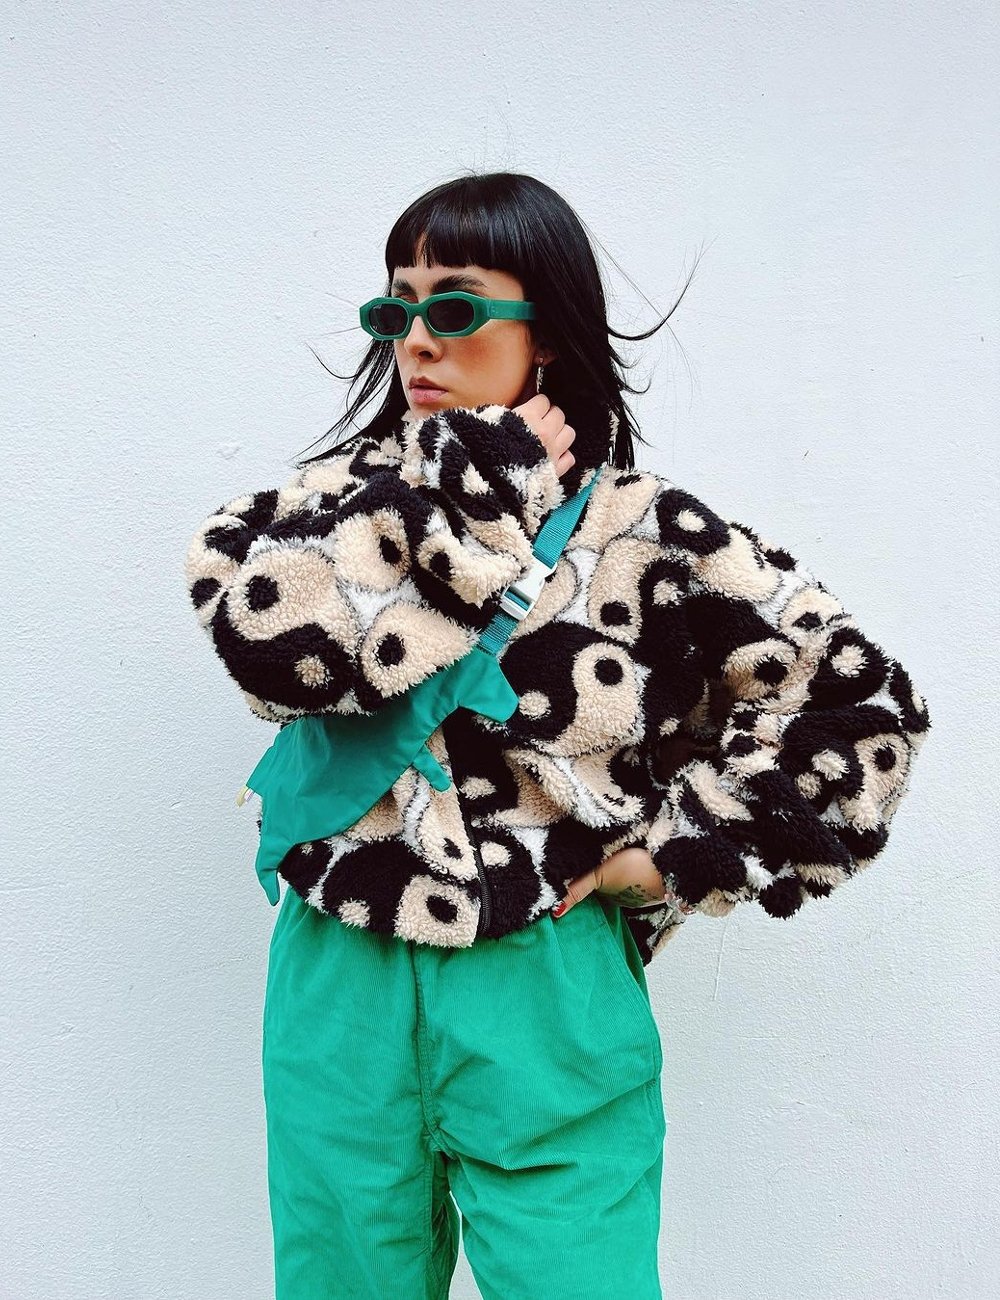 Maria Montoya - casaco, calça e óculos - termos de moda - inverno - street style - https://stealthelook.com.br